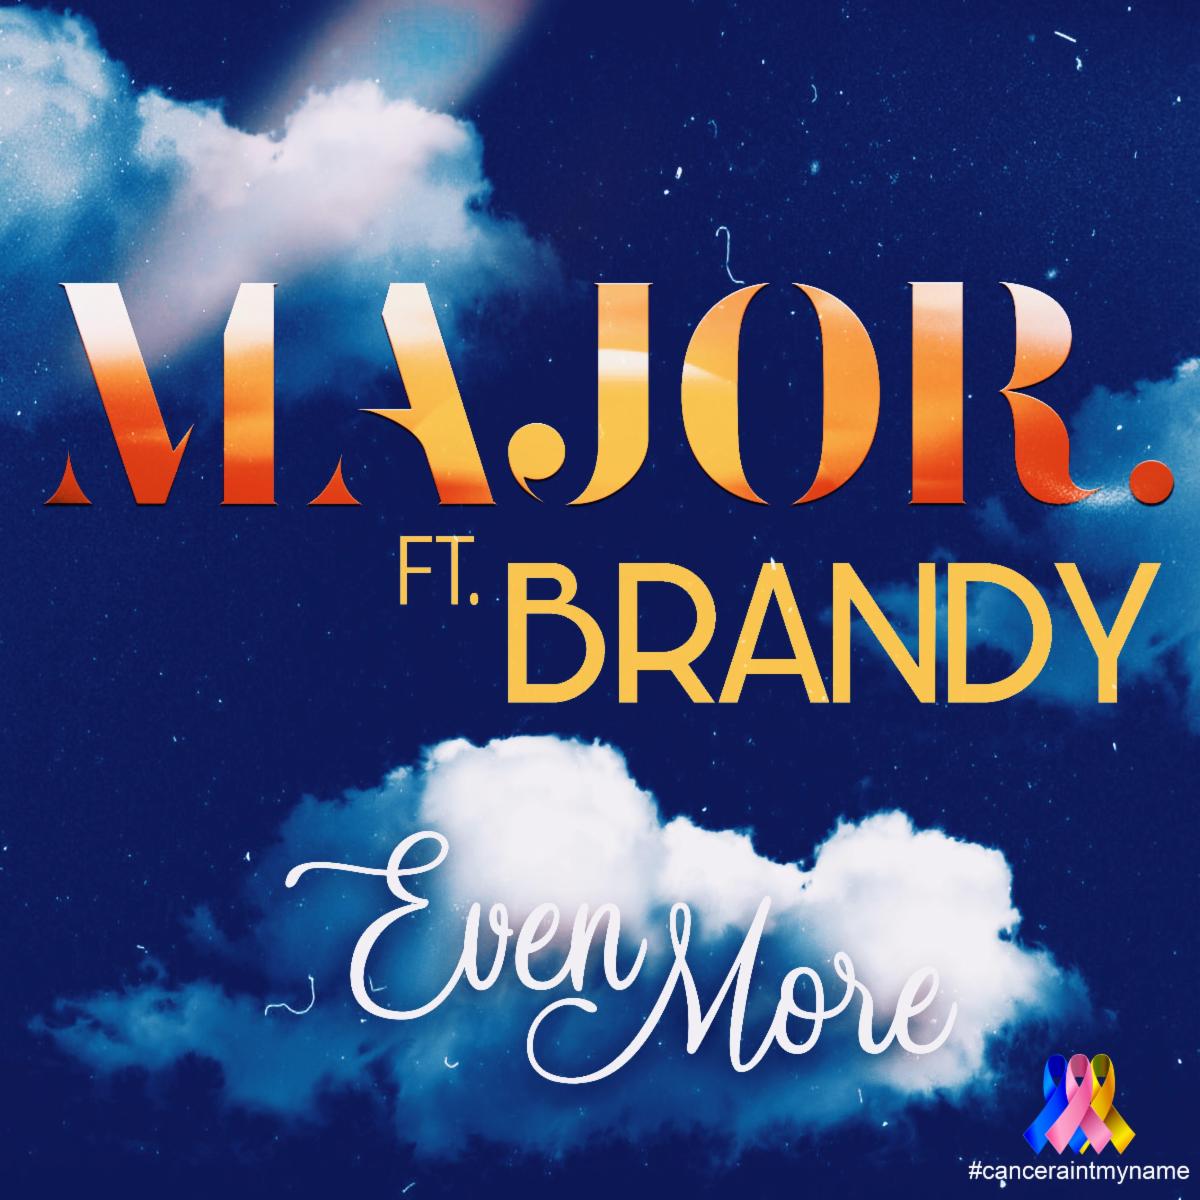 Brandy & MAJOR. Release Song "Ever More" to Benefit Cancer Survivors